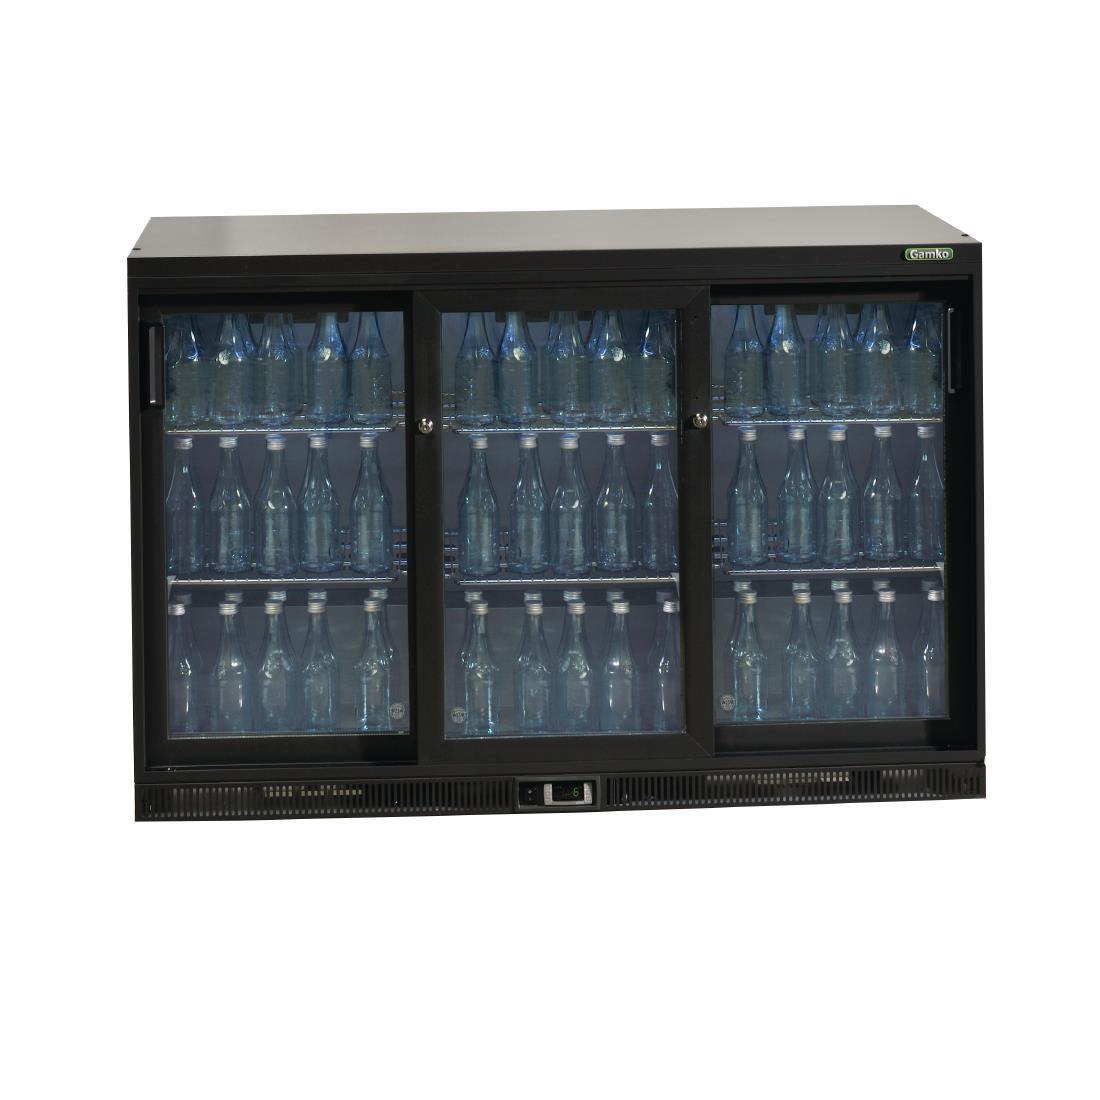 Gamko Bottle Cooler - Triple Sliding Door 315 Ltr - CE557  - 2